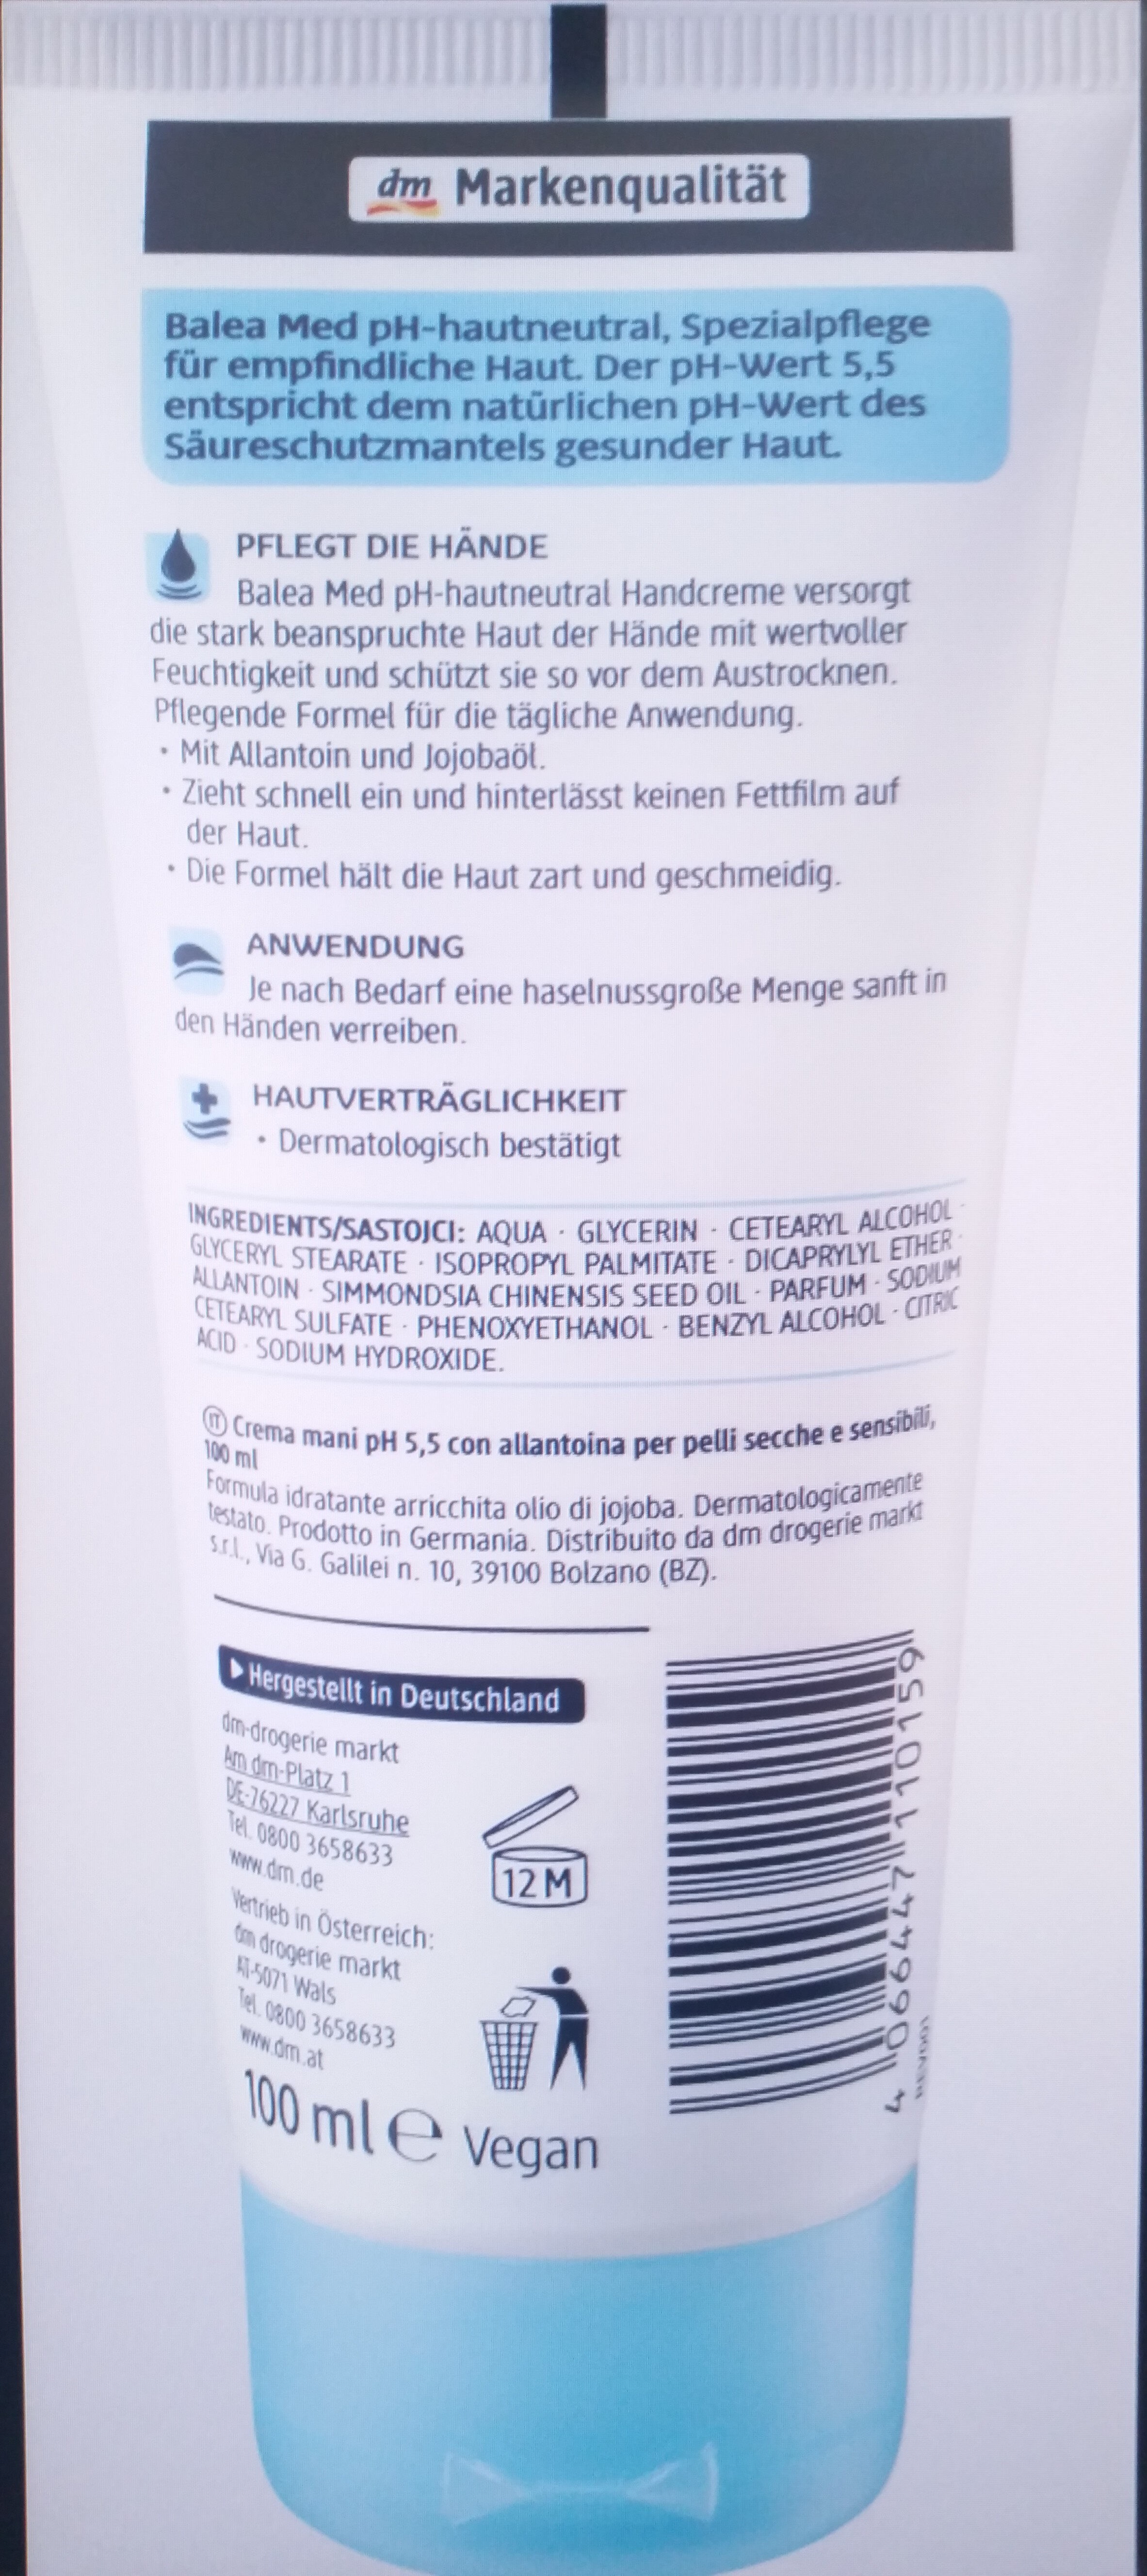 Balea MED - pH 5,5 Hautneutral - Handcreme mit Allantoin - Product - en